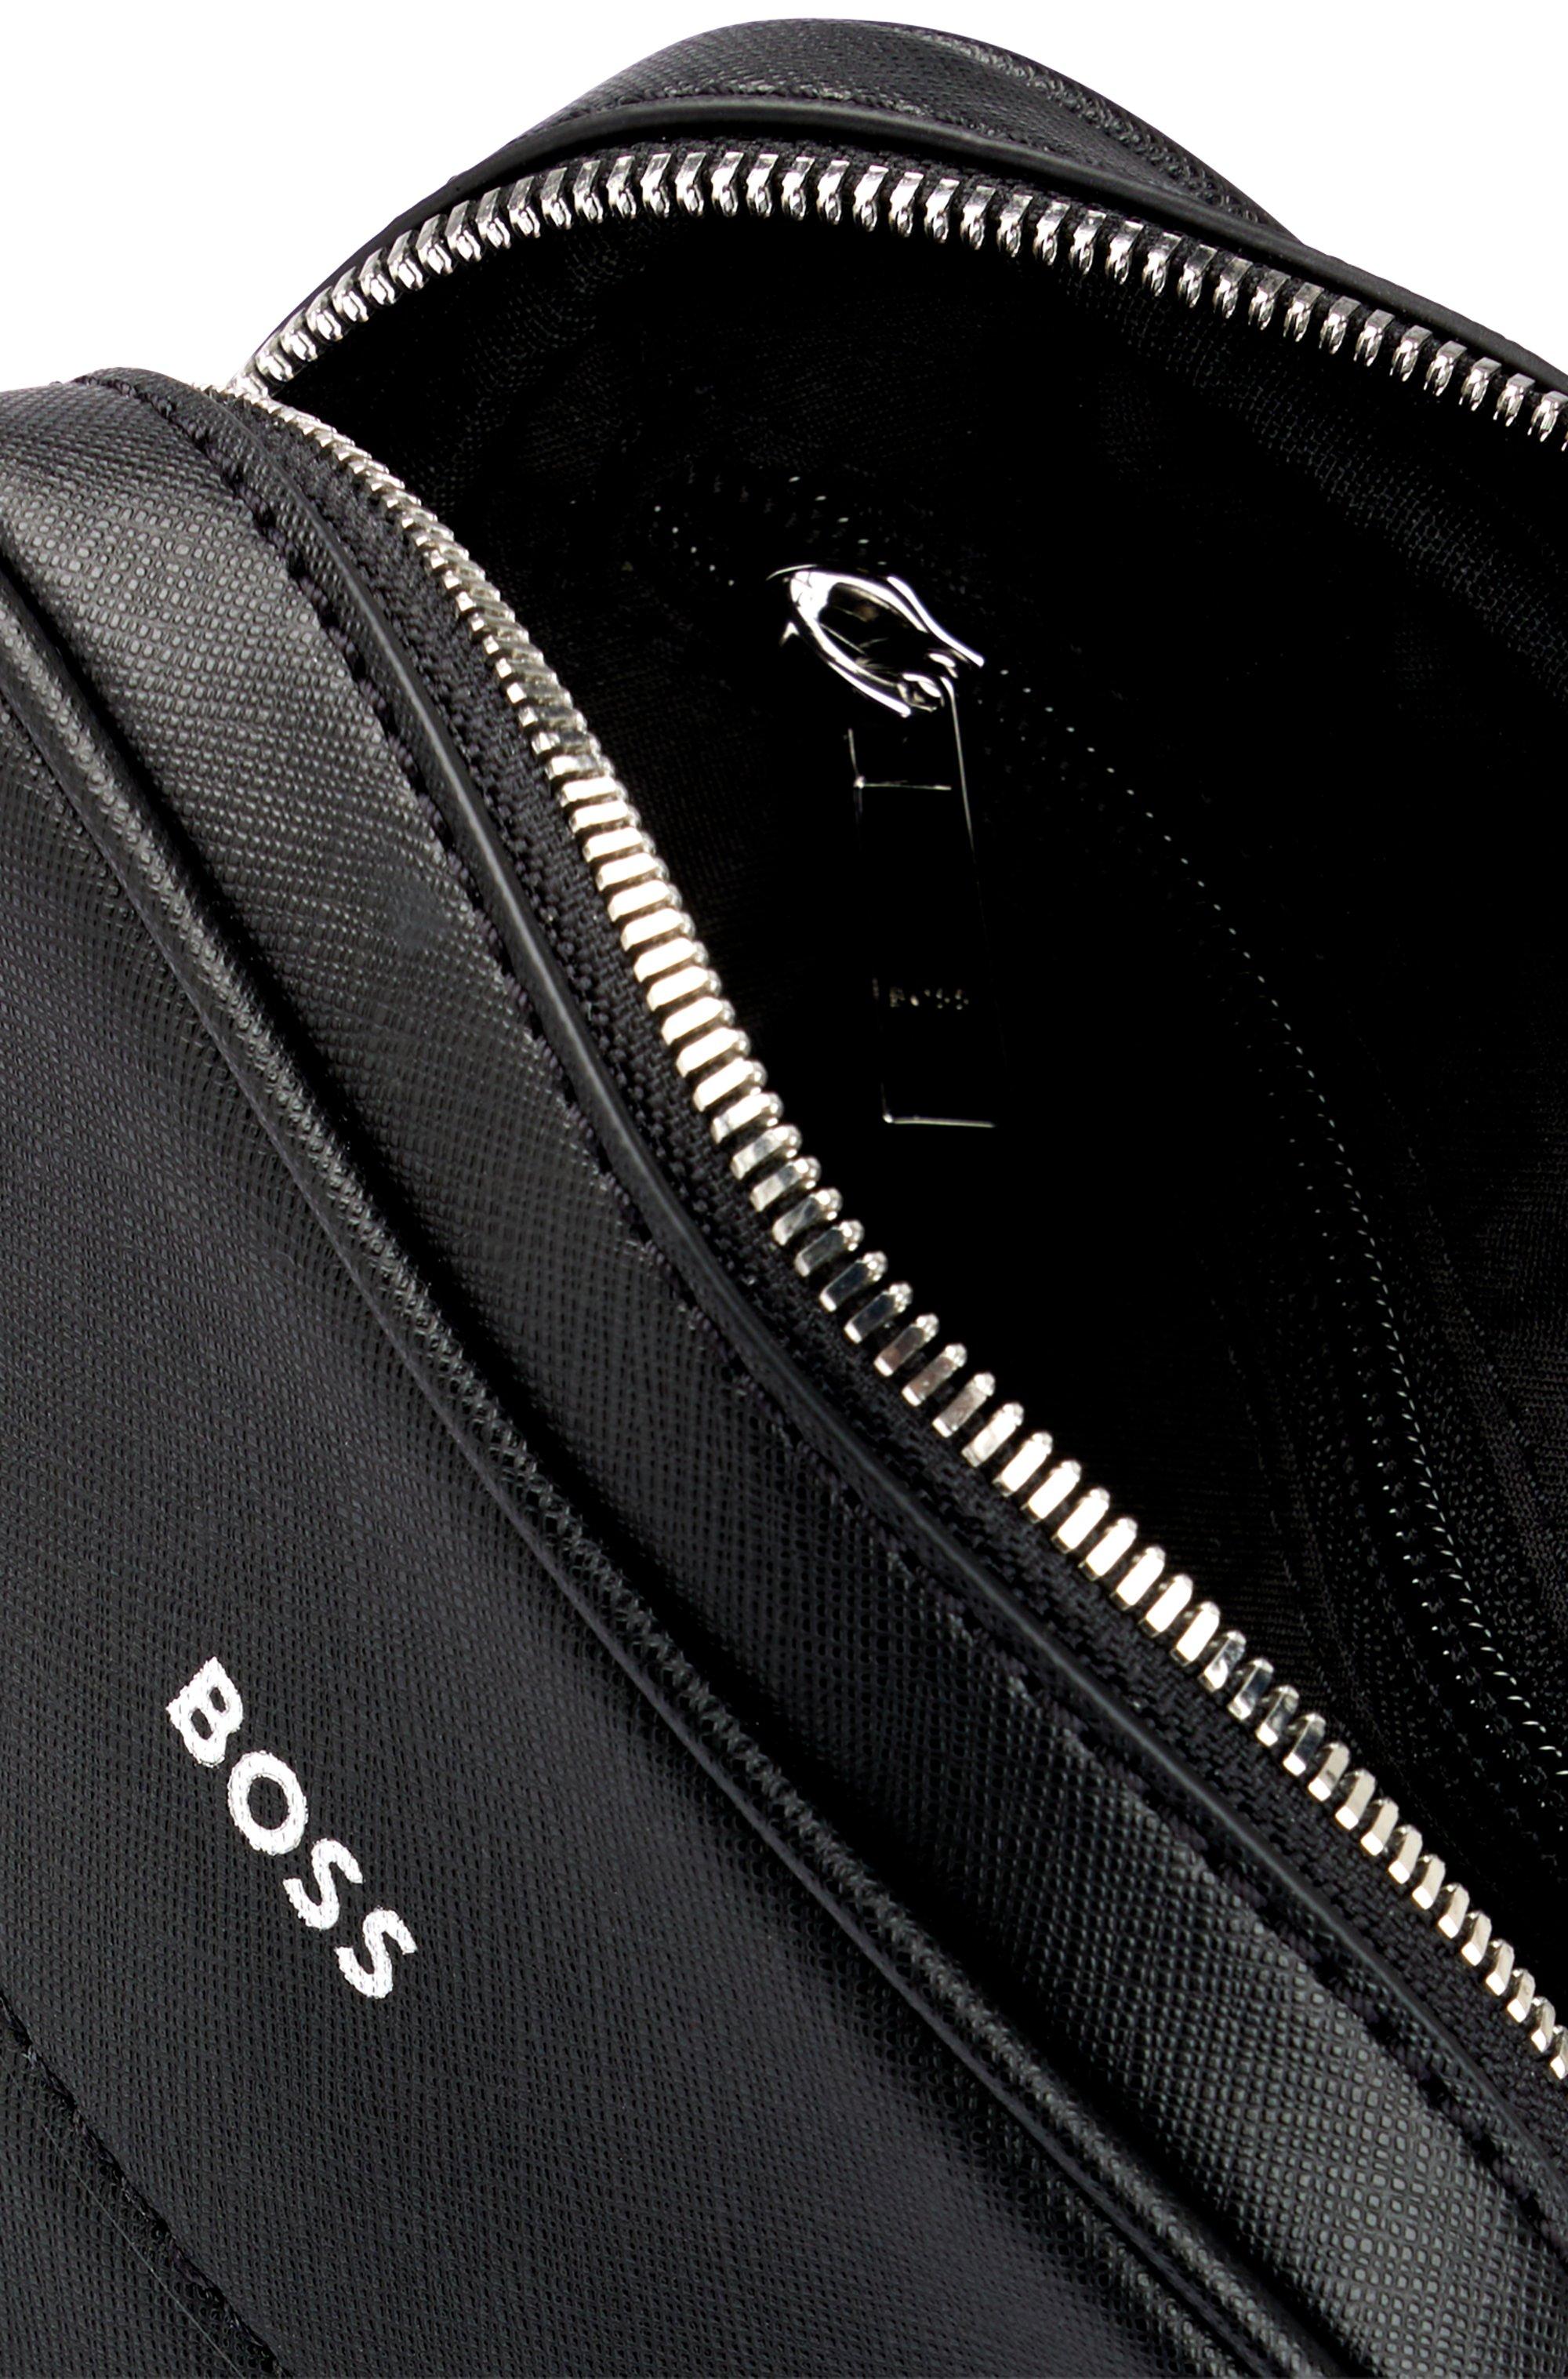 BOSS - Reporter bag in Italian fabric with monogram print